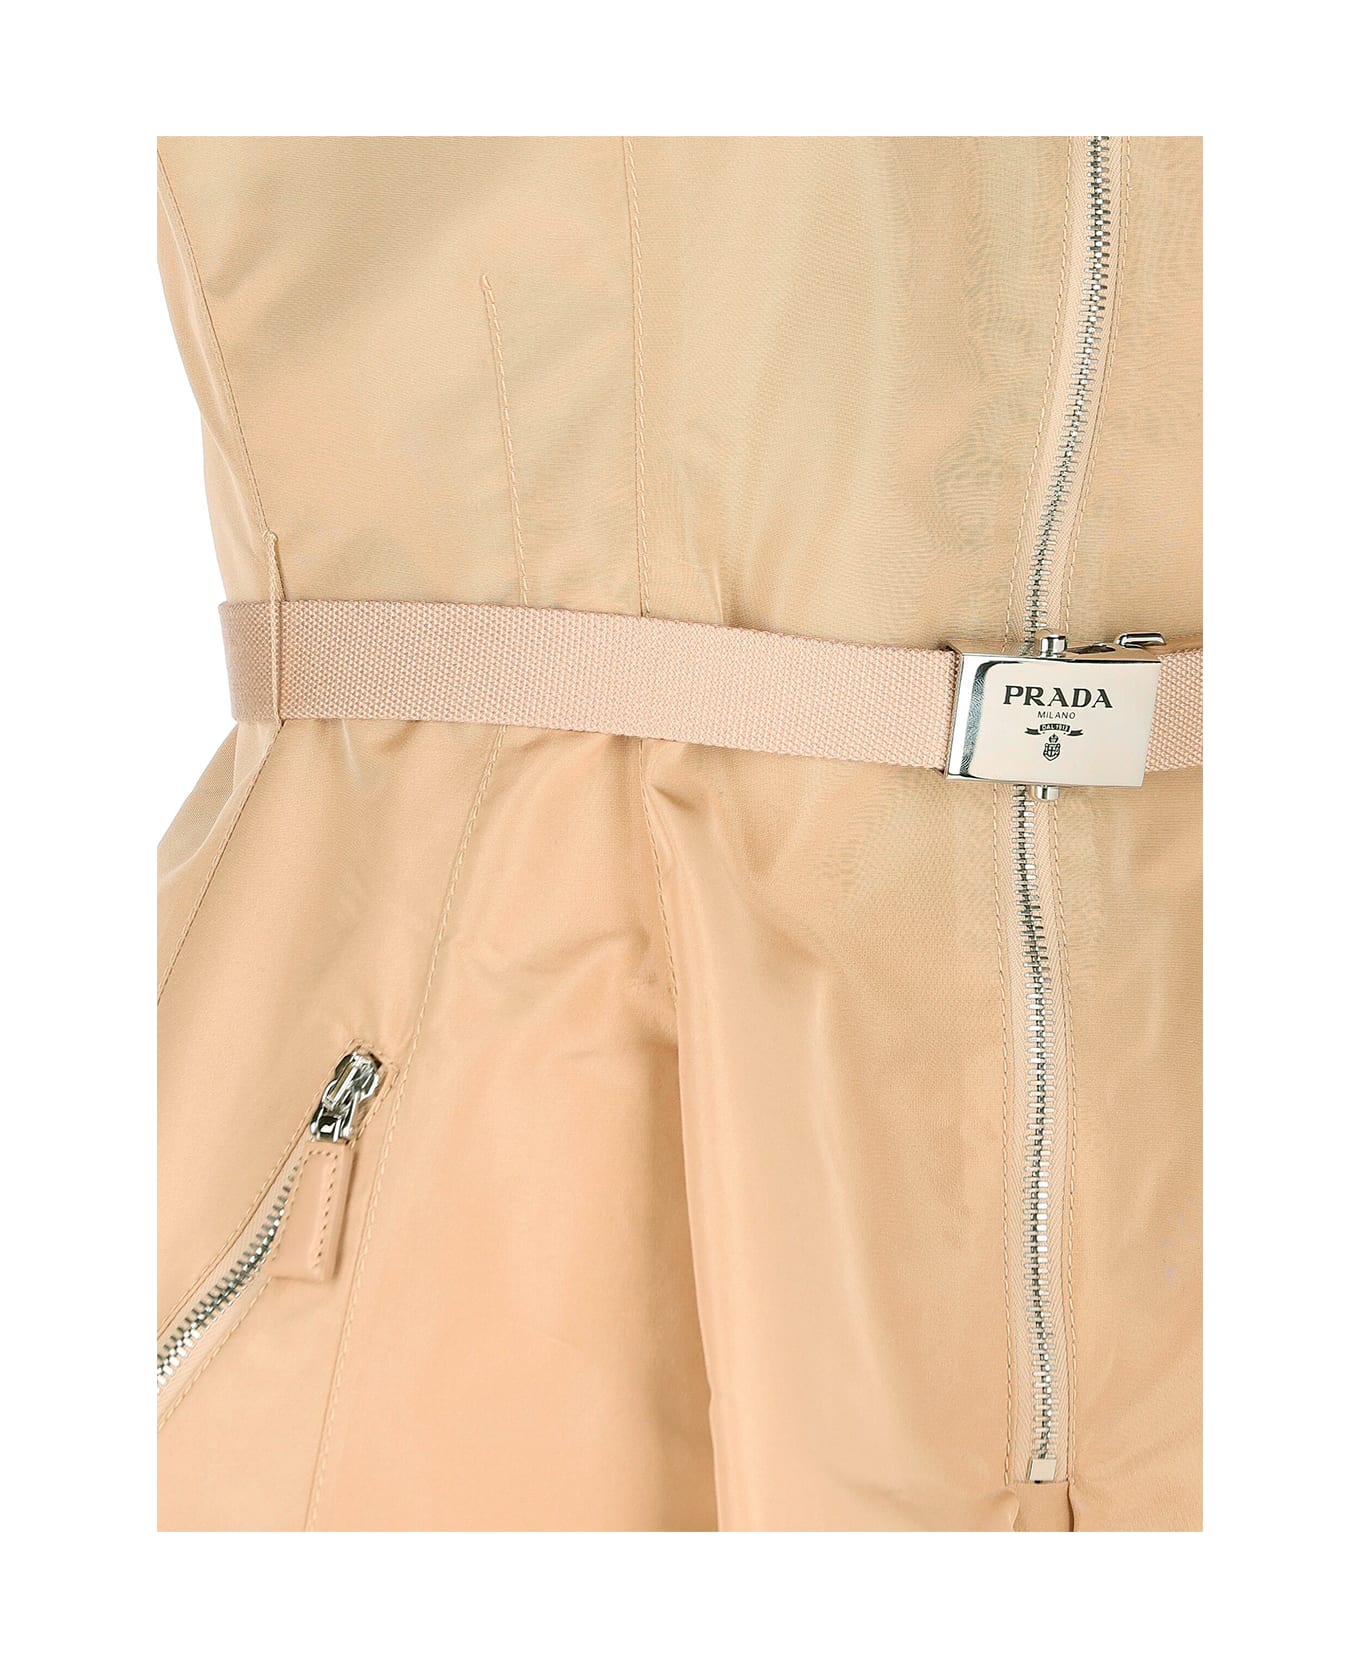 Prada Powder Pink Dress With Zip And Belt - CIPRIA